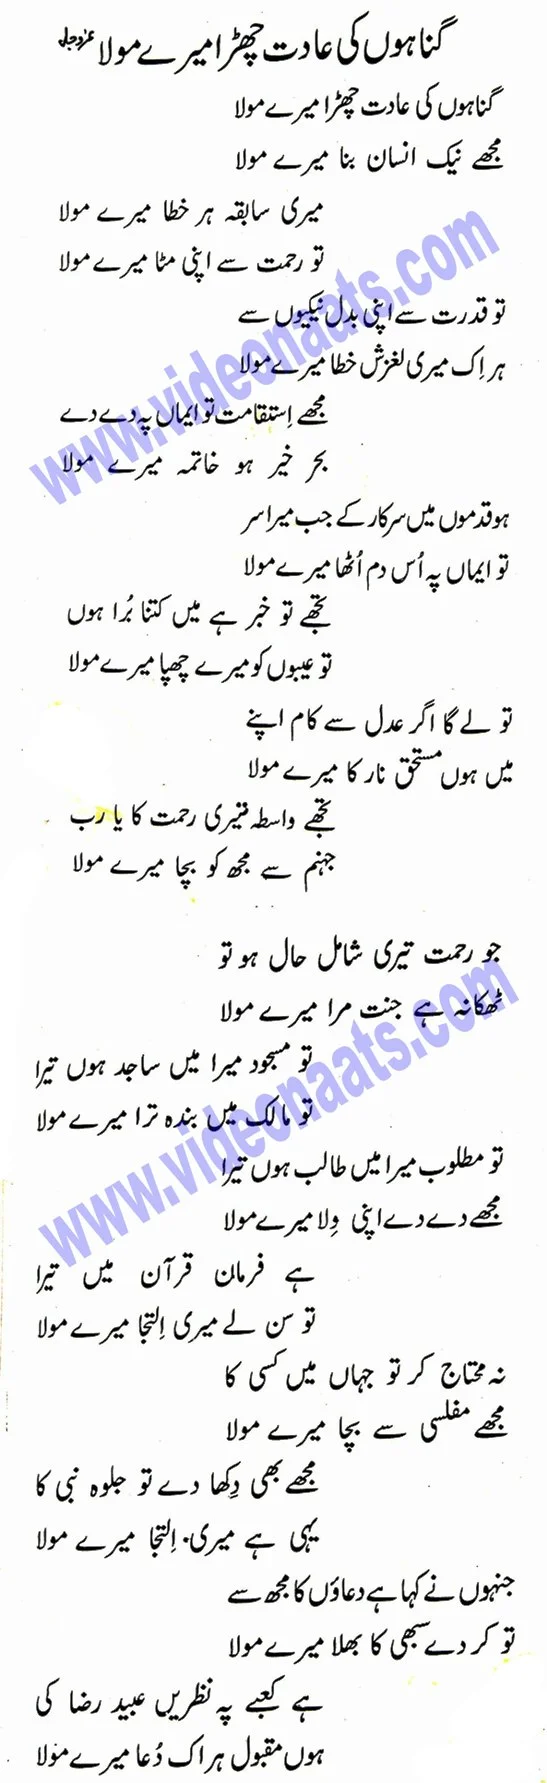 Gunahon Ki Aadat Chuda mere Maula Lyrics Urdu